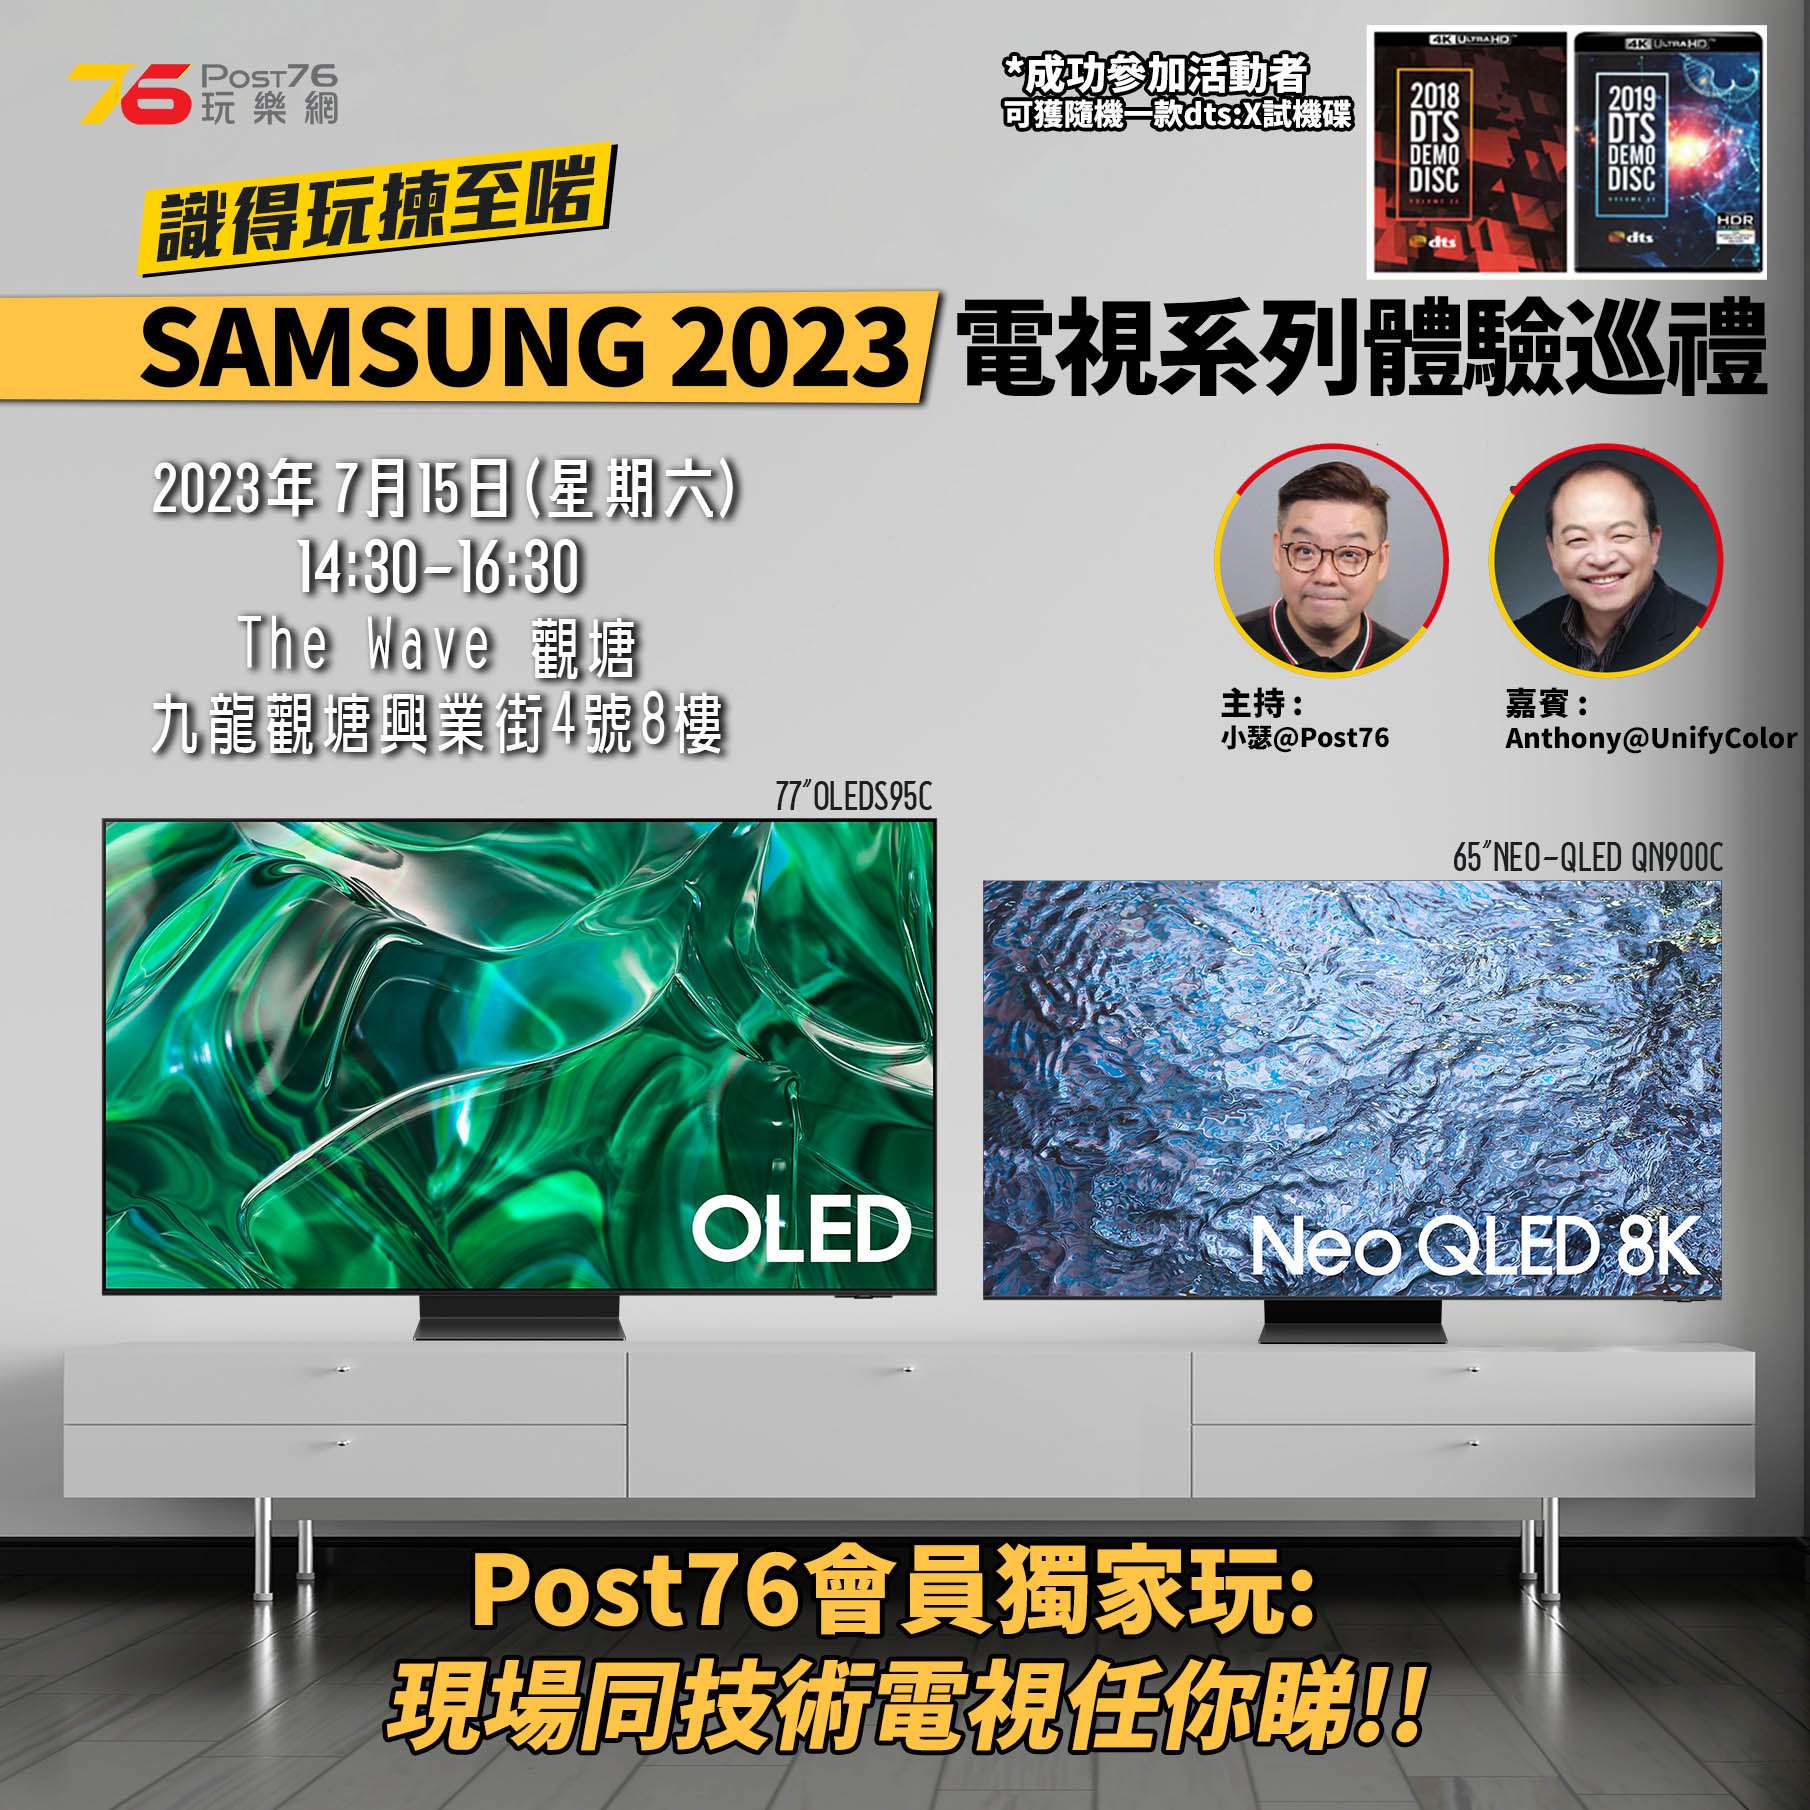 SamsungTV_Event03_arthur_v2_IG copy.jpg